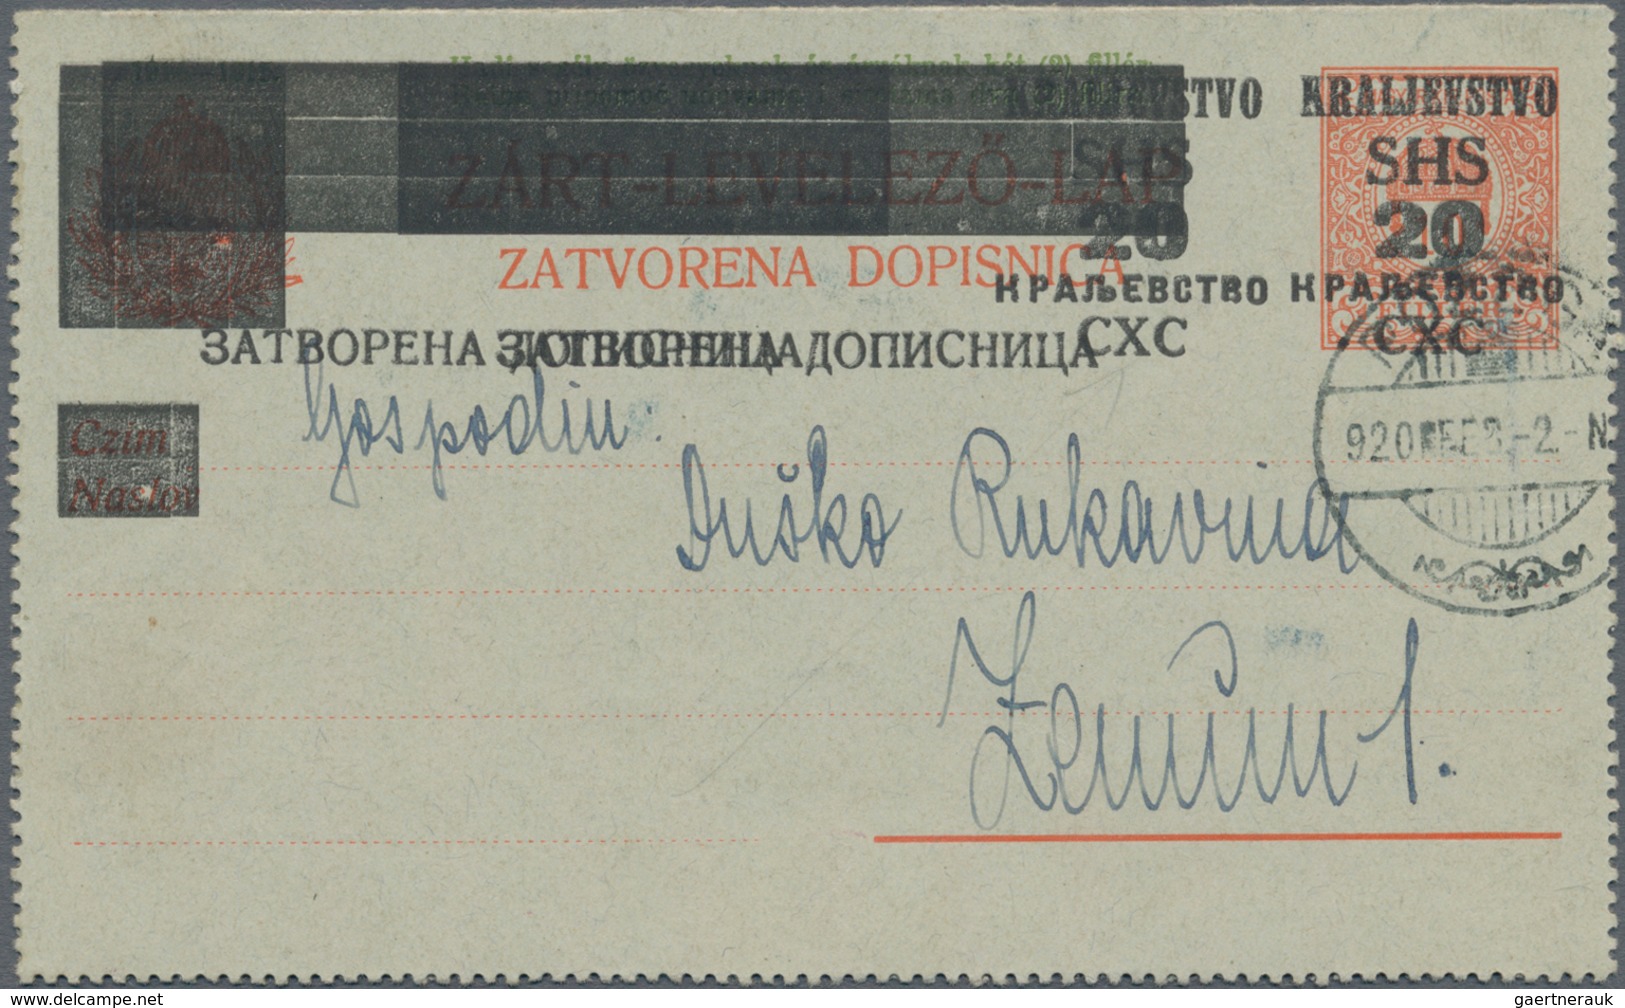 Jugoslawien - Ganzsachen: 1920, "KRALJEVSTVO SHS 20..." Double Overprint On Hungarian Letter Card 10 - Ganzsachen